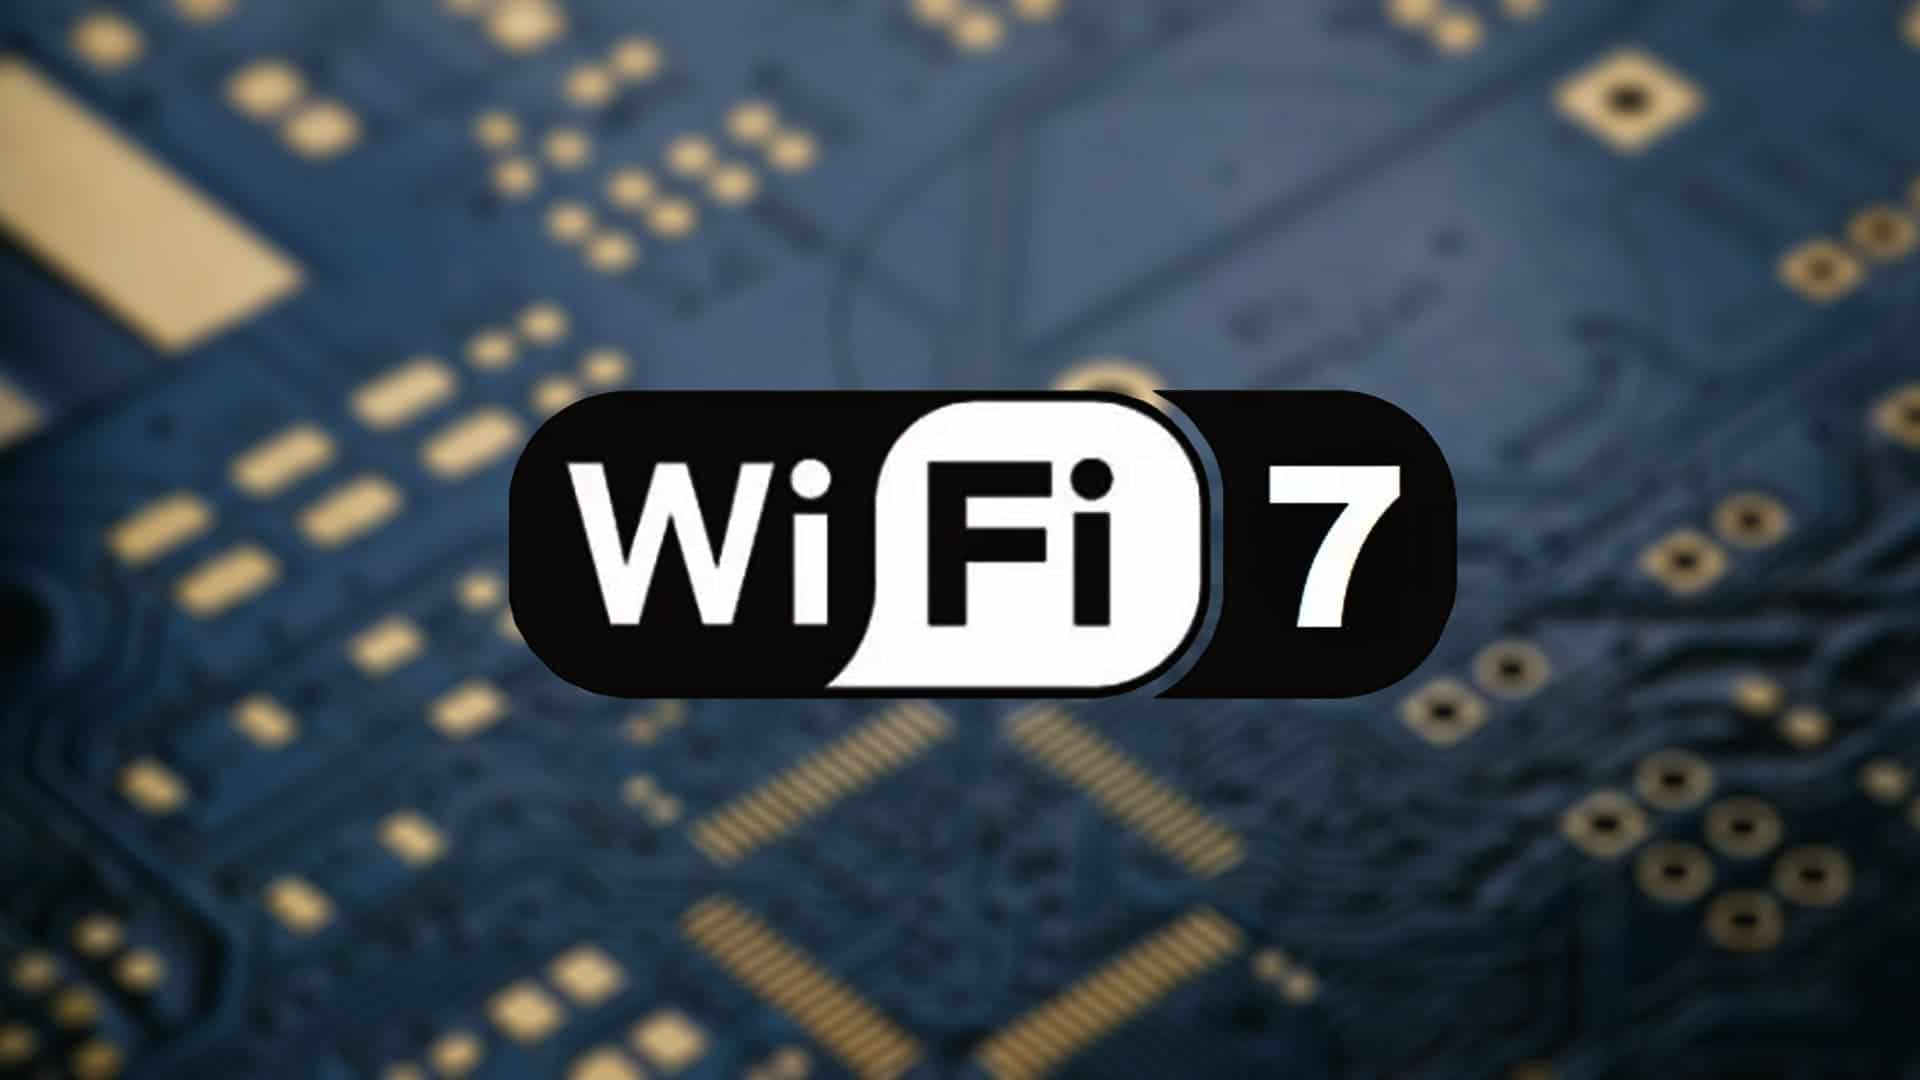 Новый вай фай интернета. WIFI 7. Wi-Fi 7 стандарты. WIFI 7 Qualcomm. WIFI 6.